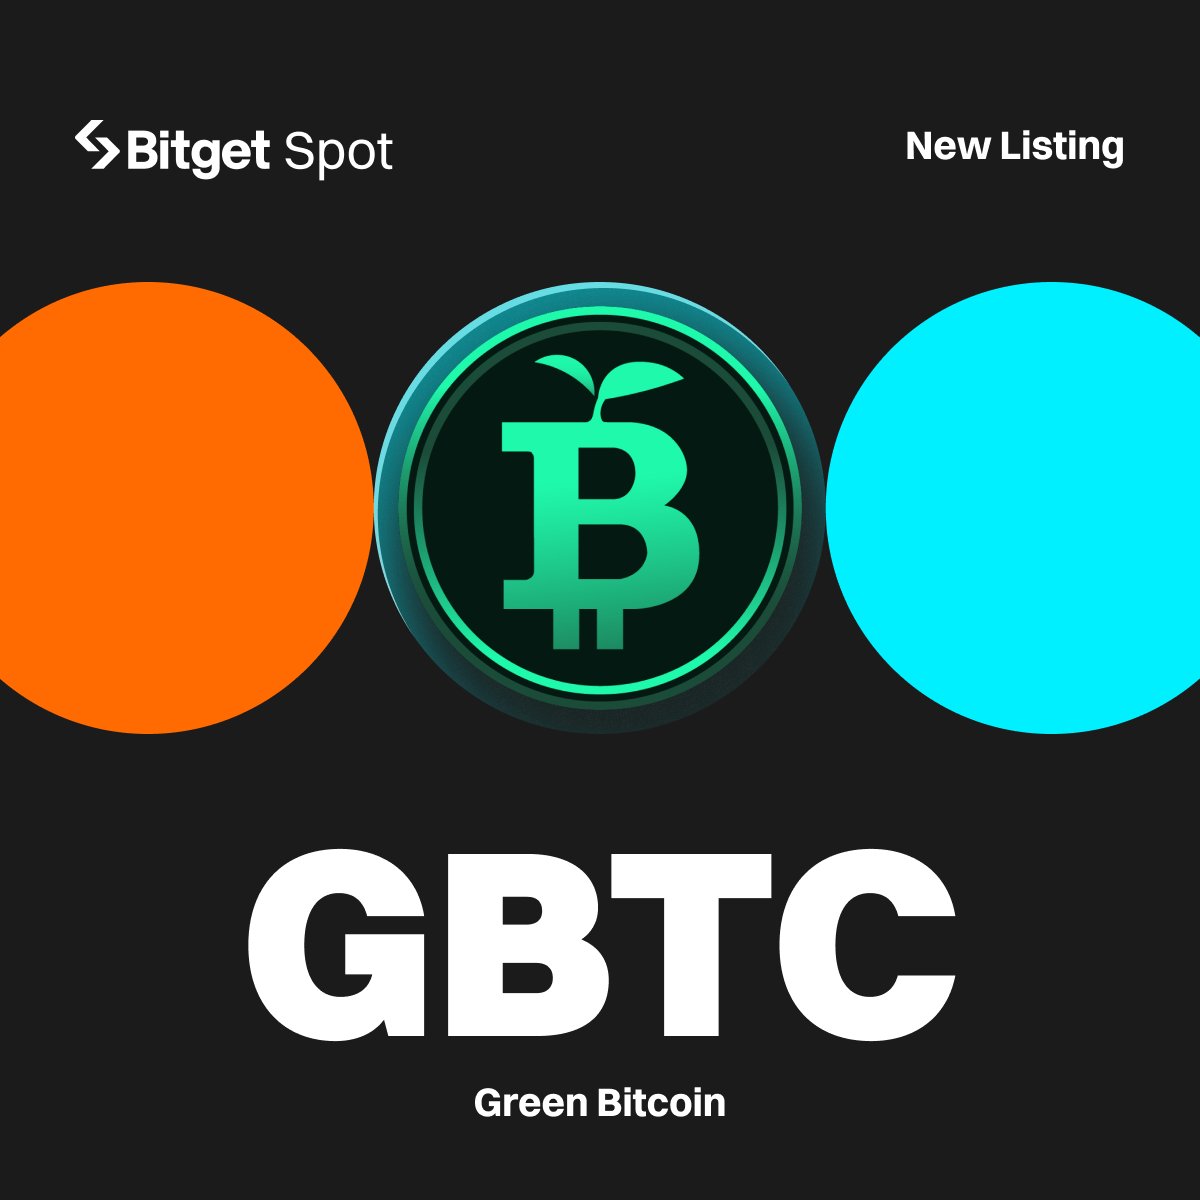 📢 New Listing - $GBTC @GreenBTCtoken #Bitget will list GBTC/USDT with $78,000 worth of $GBTC up for grabs! 🔹Deposit: opened 🔹Trading starts: April 26, 11:00 AM (UTC) More details: bitget.com/en/support/art…